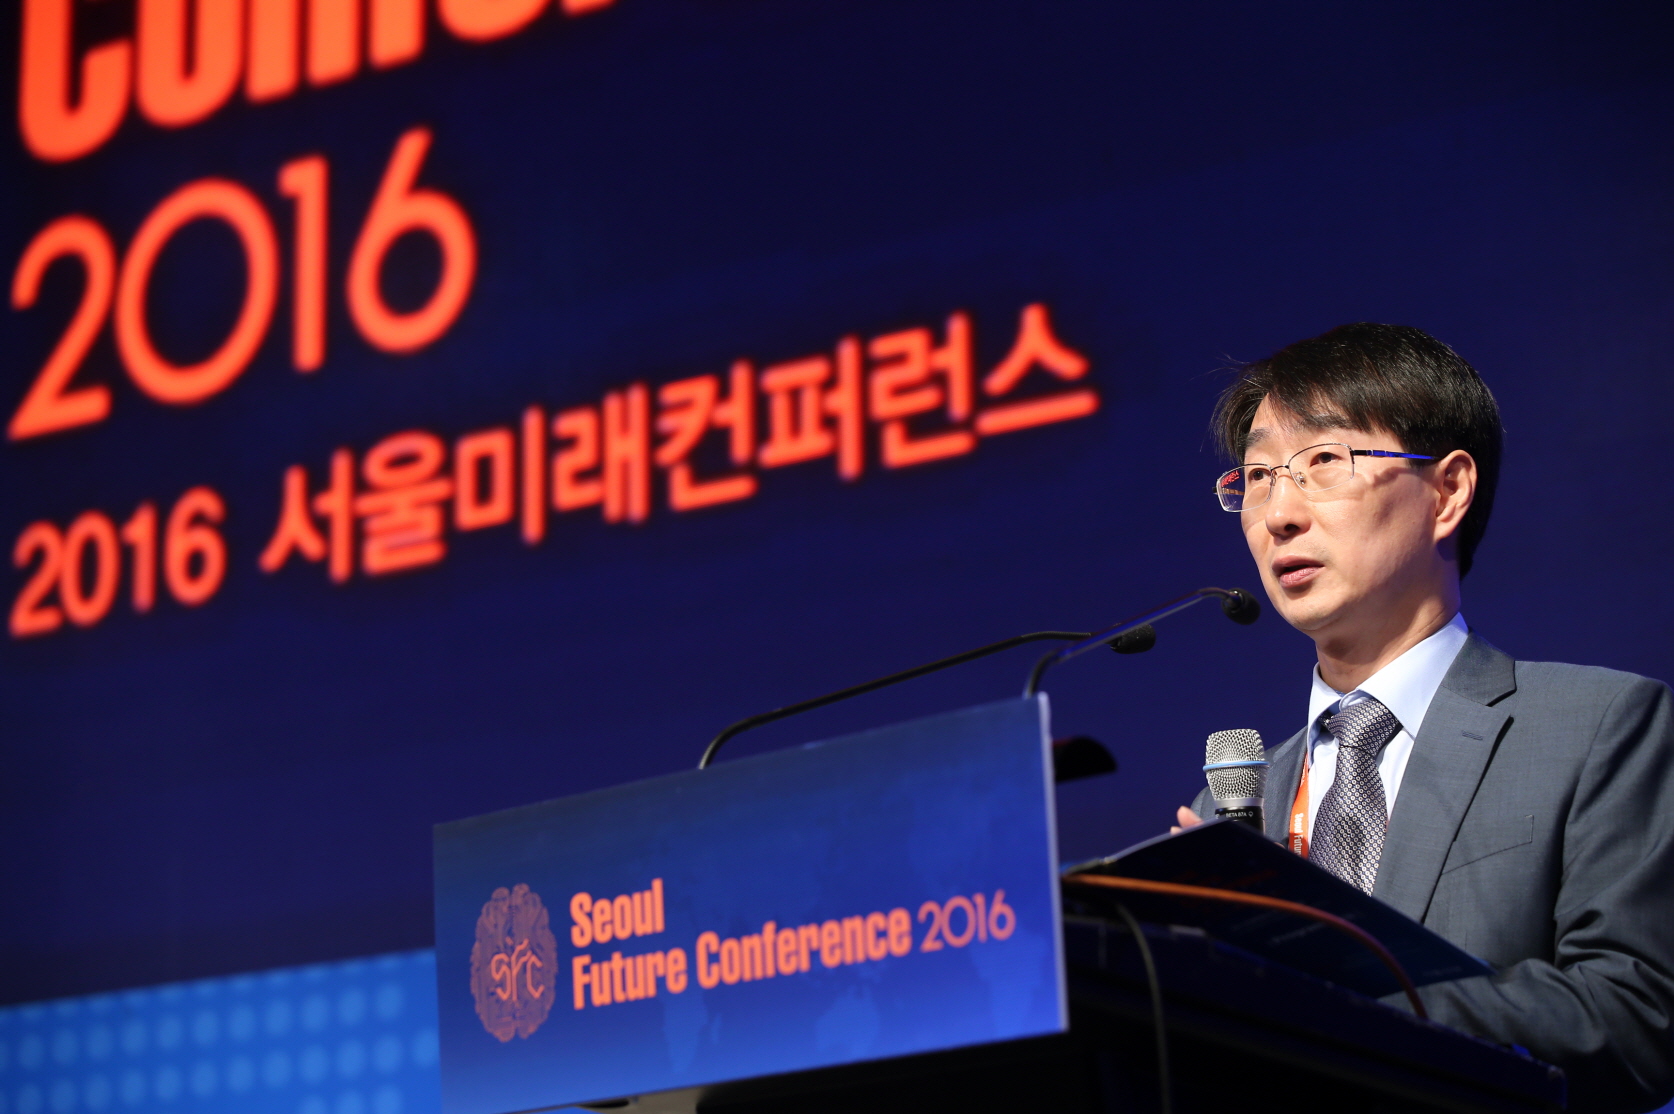 2016 SFC Session I 김정환 산업통상자원부 시스템산업정책관